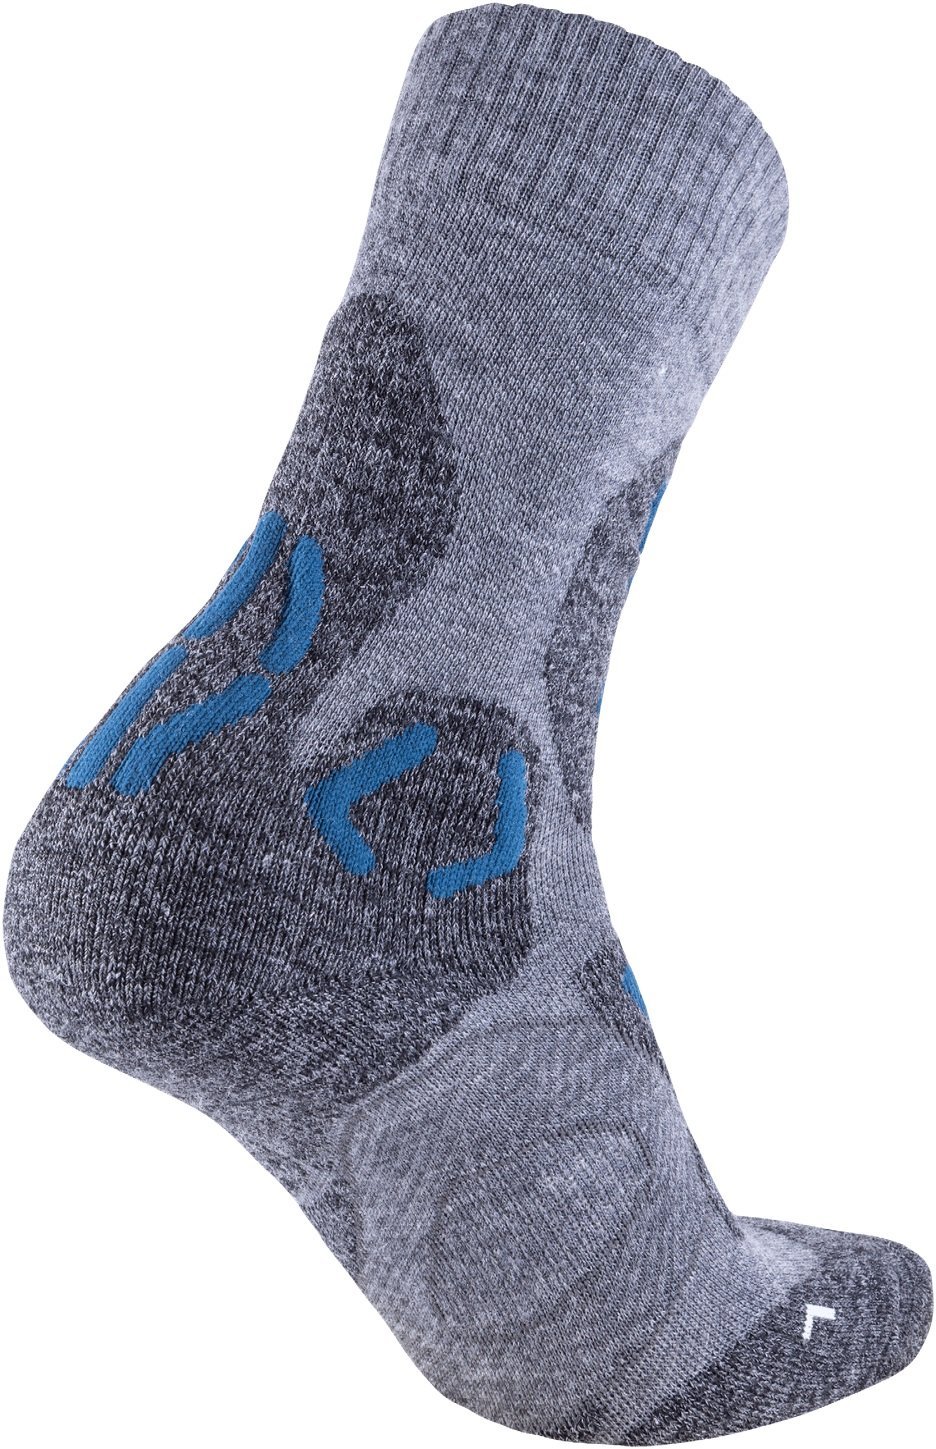 Ponožky UYN Trekking Winter Merino W - sivá/modrá